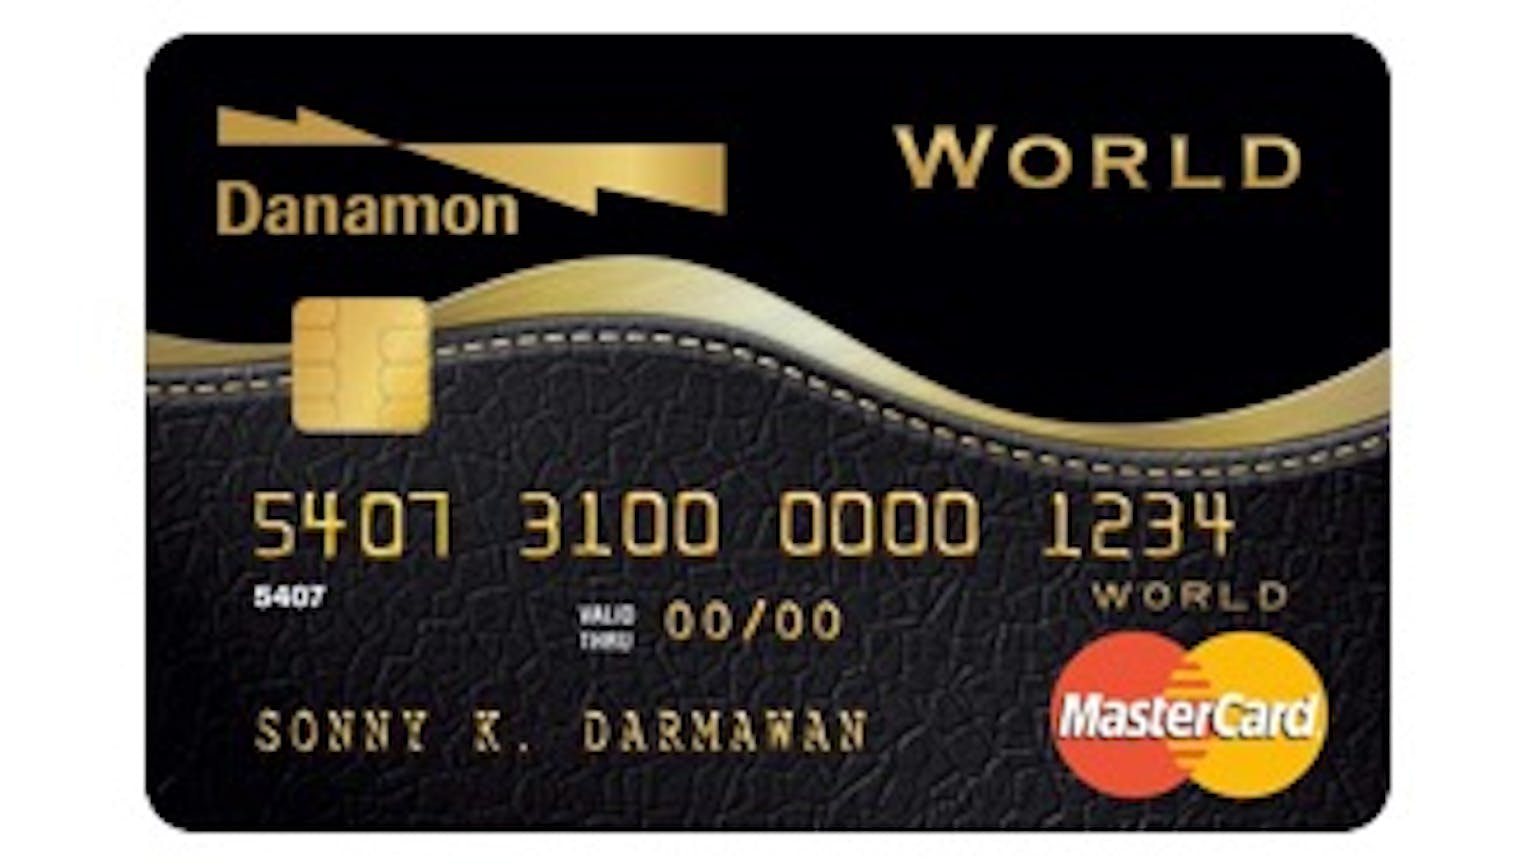 Danamon World MasterCard